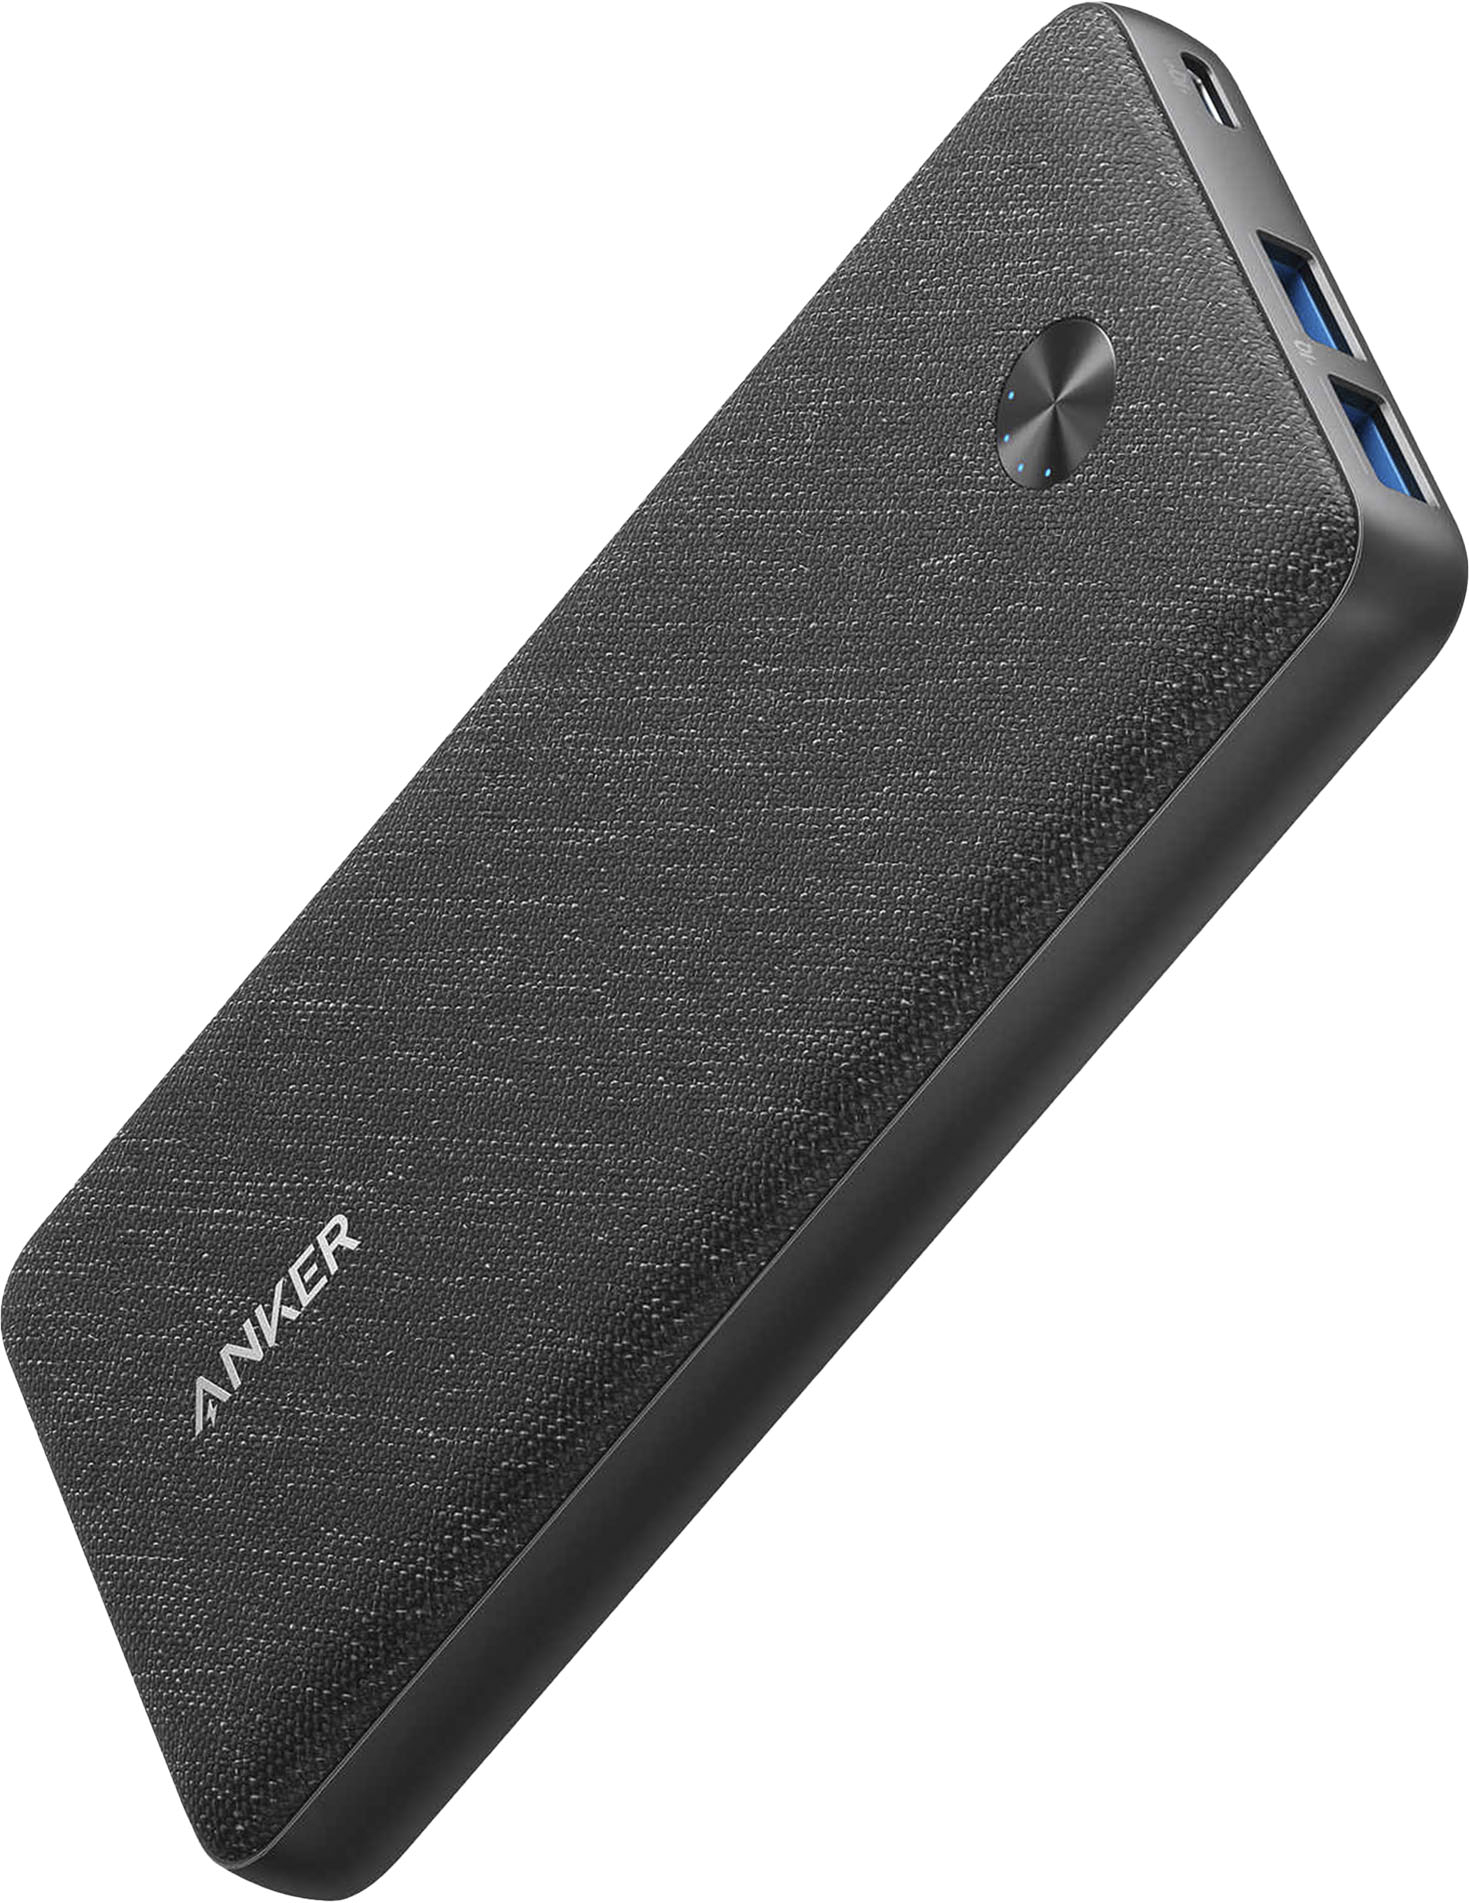 Anker PowerCore III Sense 20K 20W PD USB-C Portable Battery Charger Black A1365H11-1 Best Buy